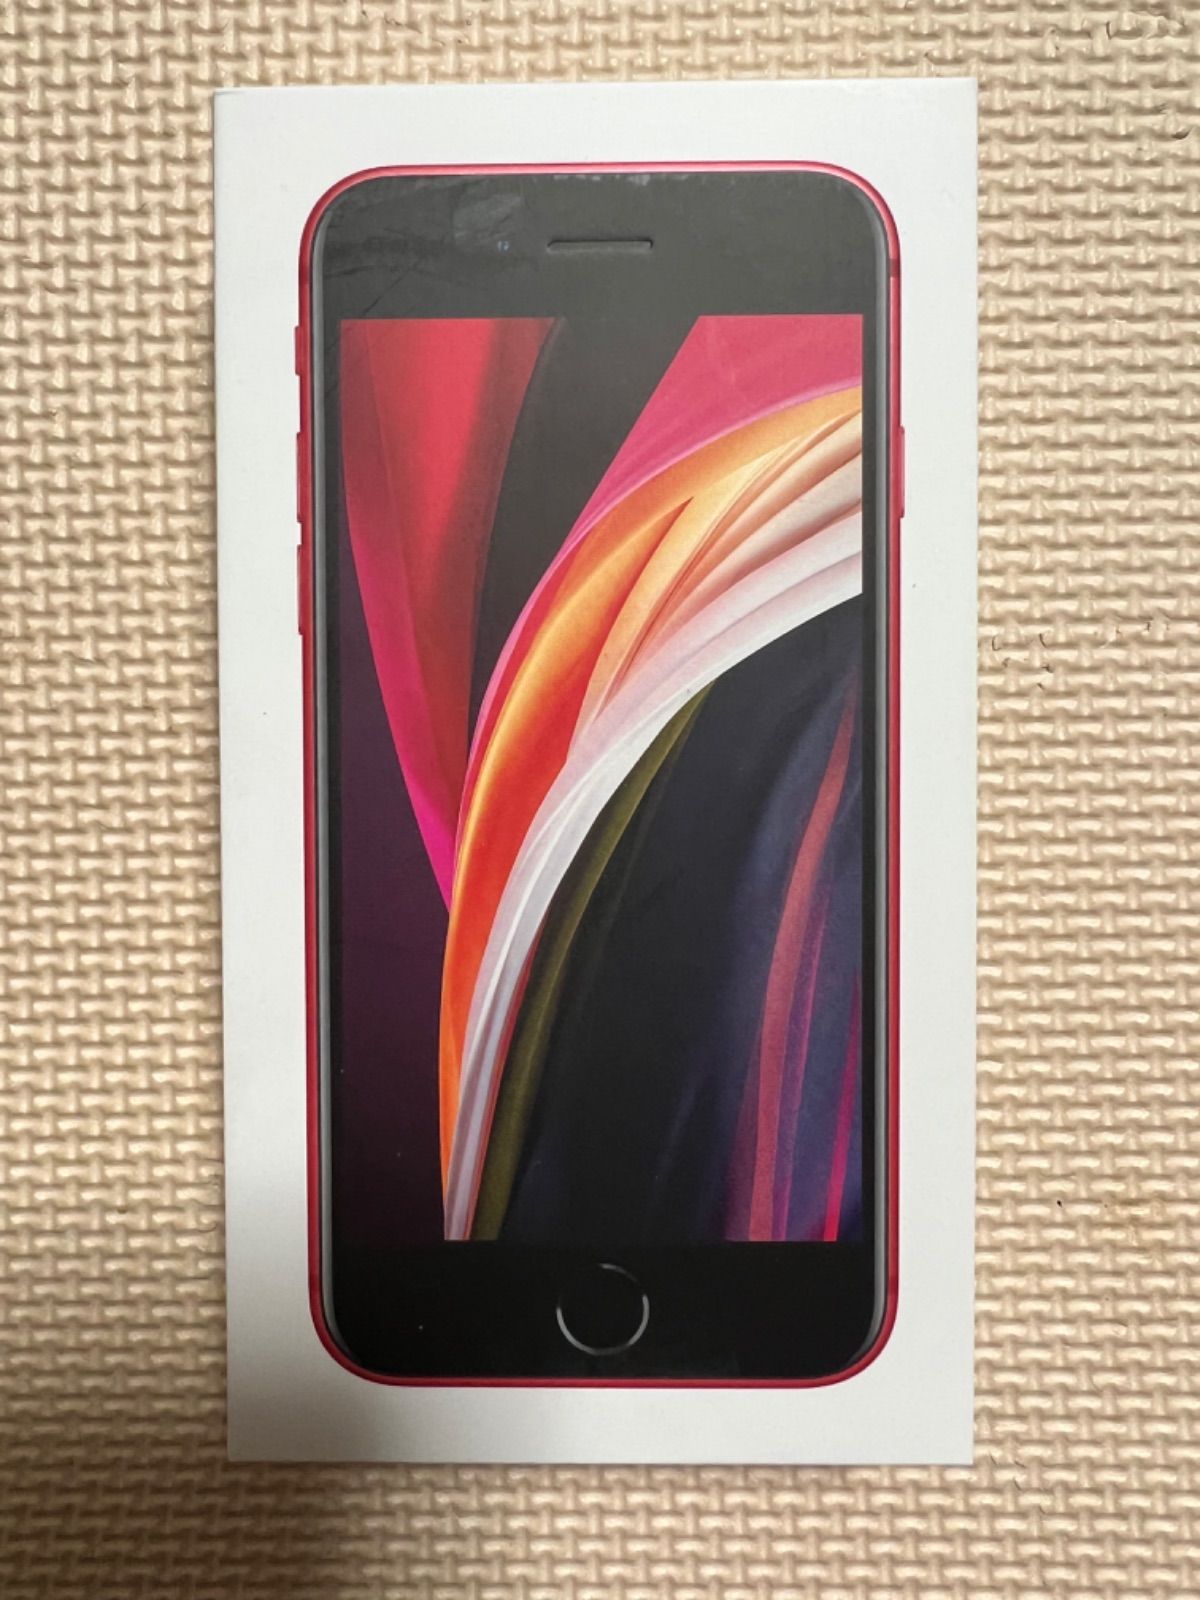 iPhone SE 第二世代 RED 赤 64GB SIMフリー 新品未使用 - CB - メルカリ